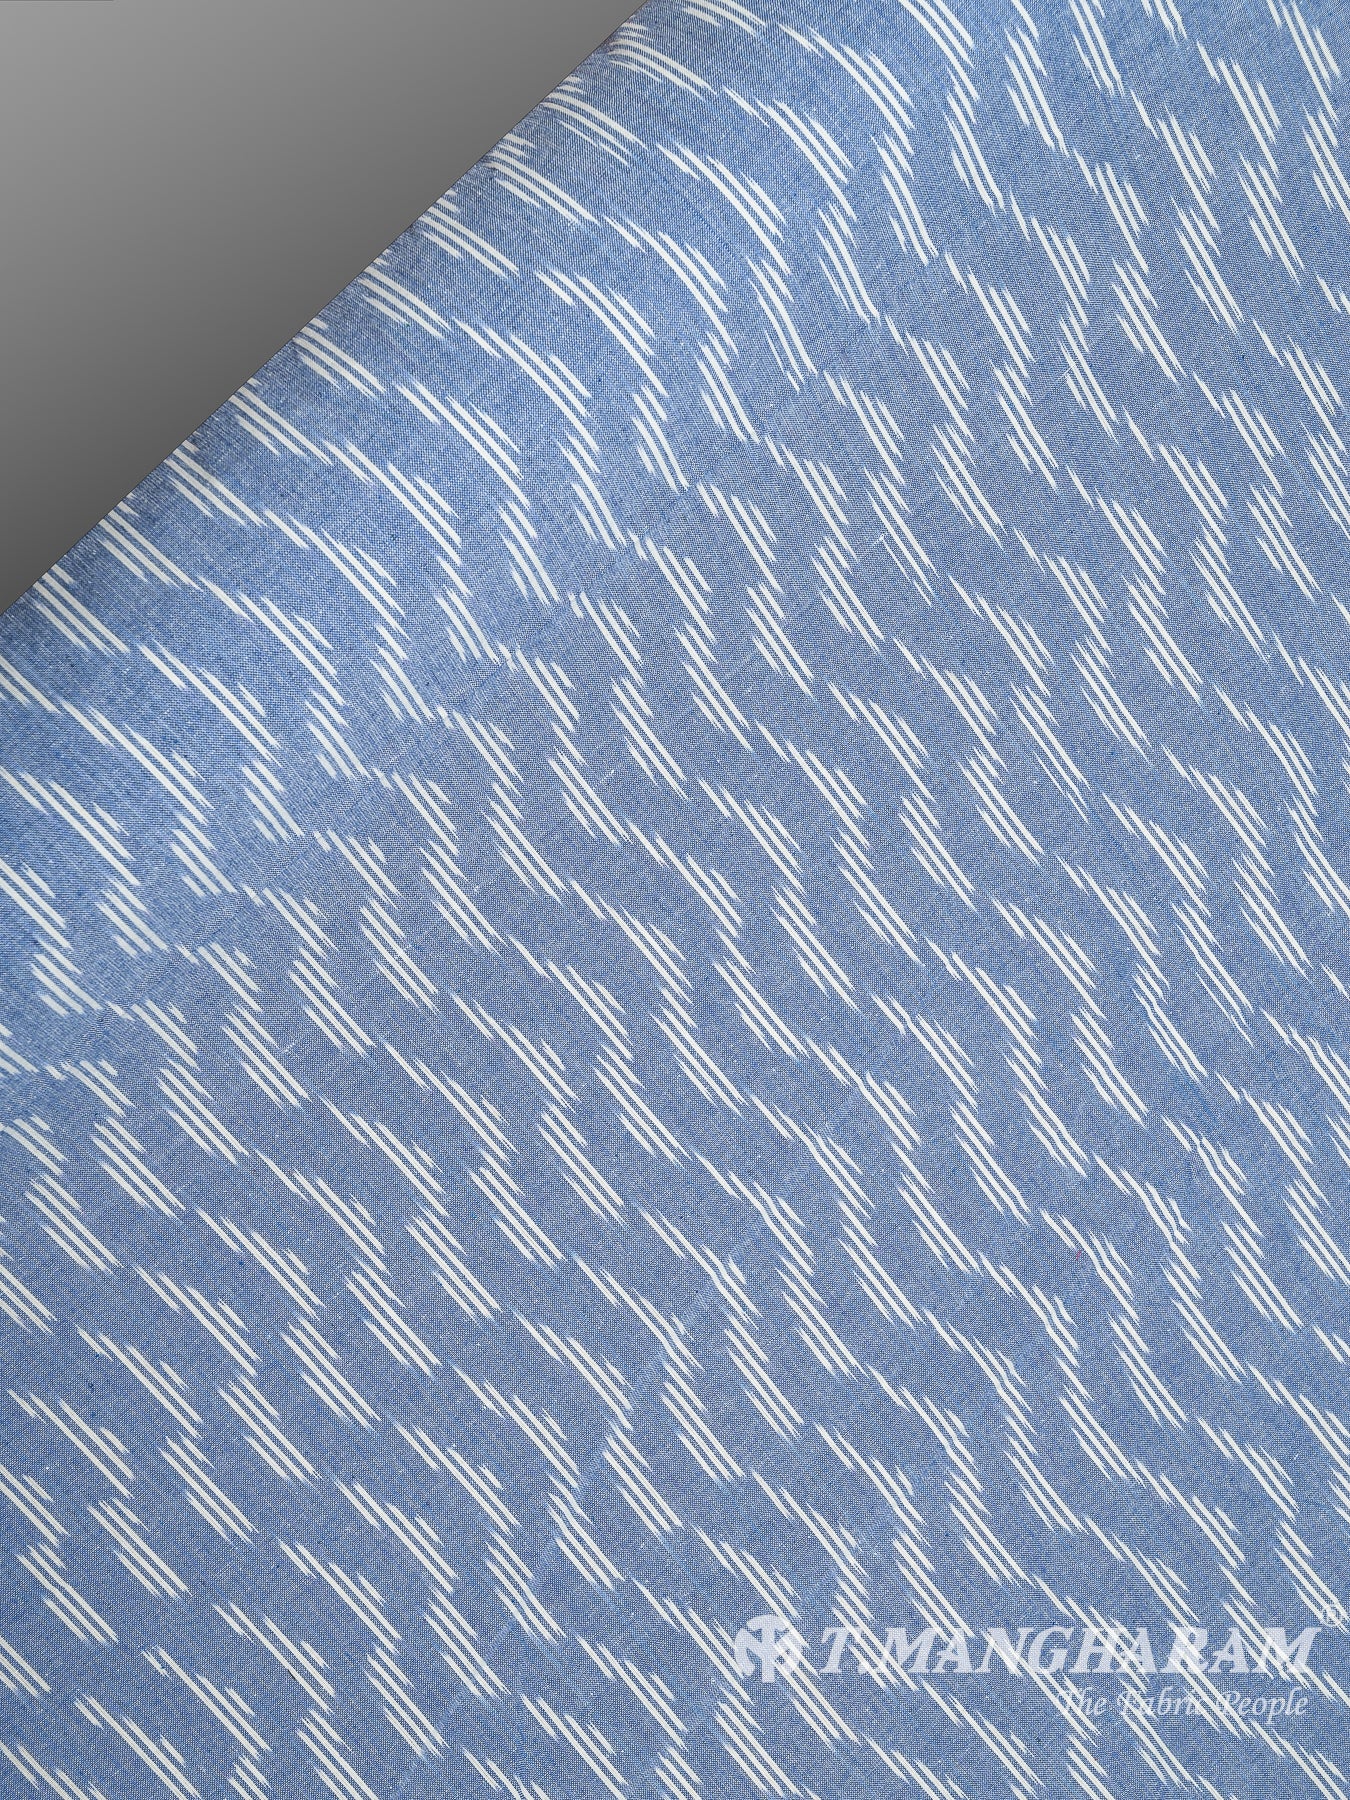 Blue Cotton Ikat Print Fabric - EB5832 view-2